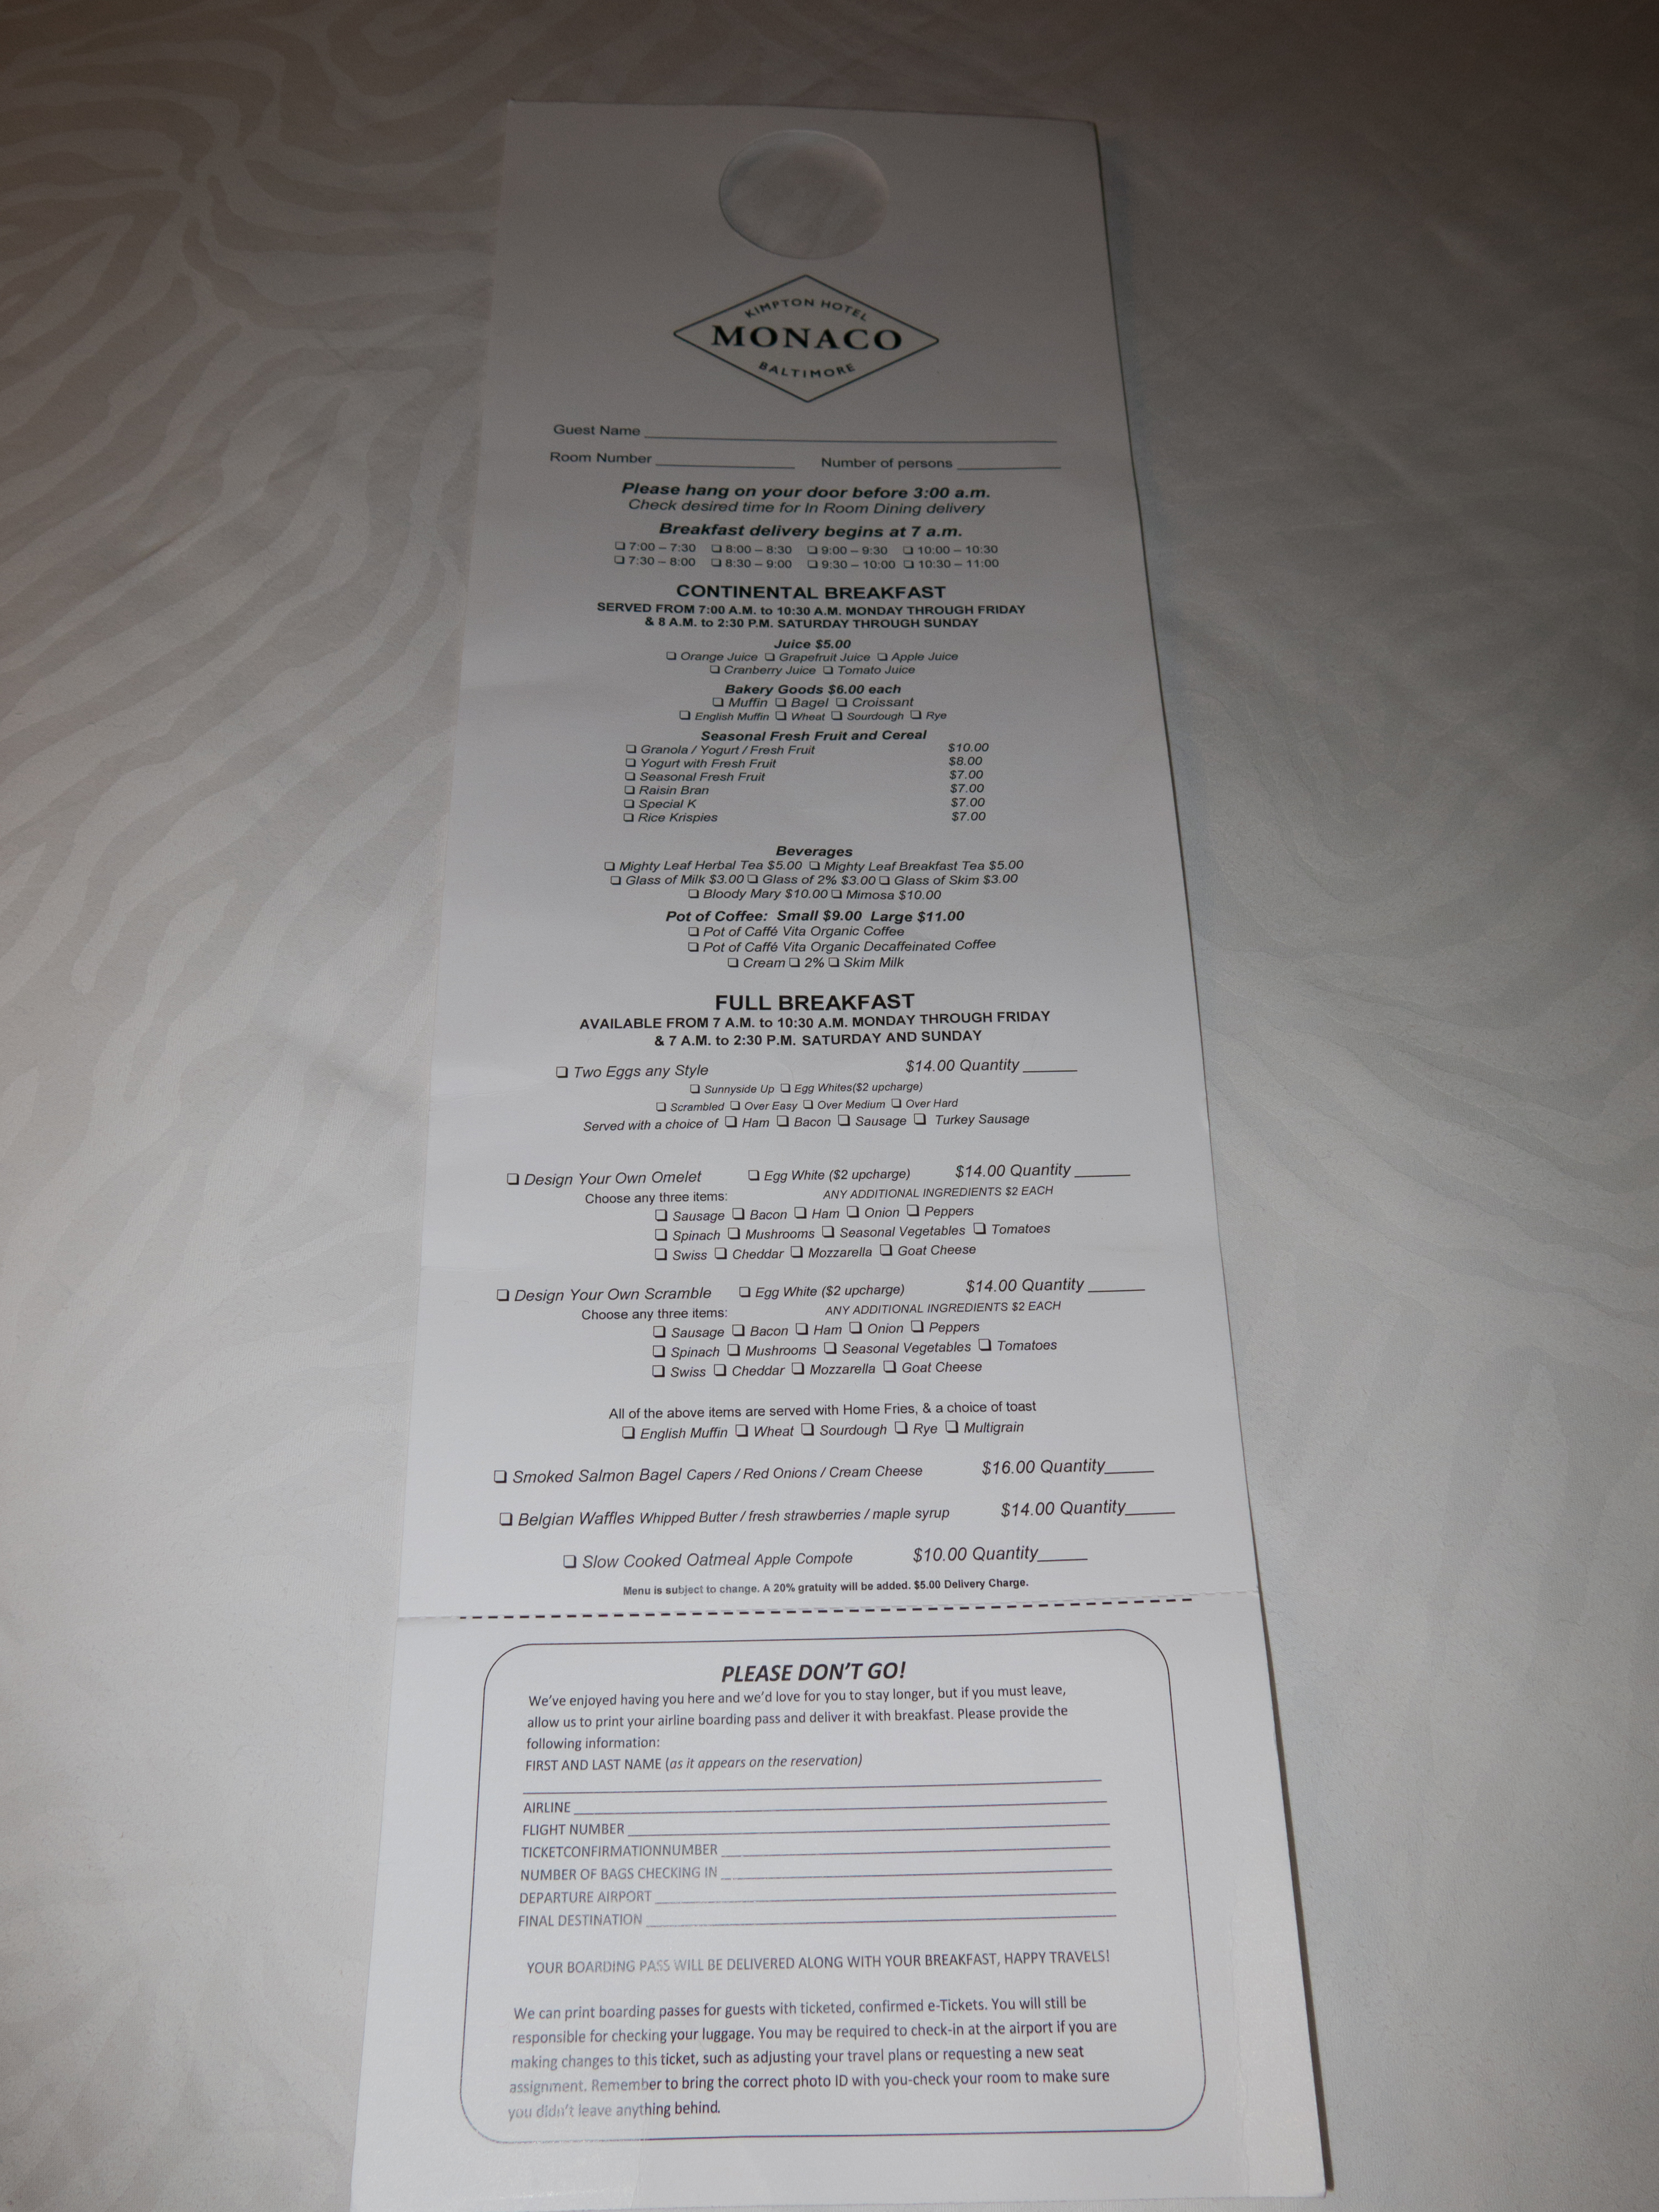 Breakfast room service menu at Hotel Monaco in Baltimore